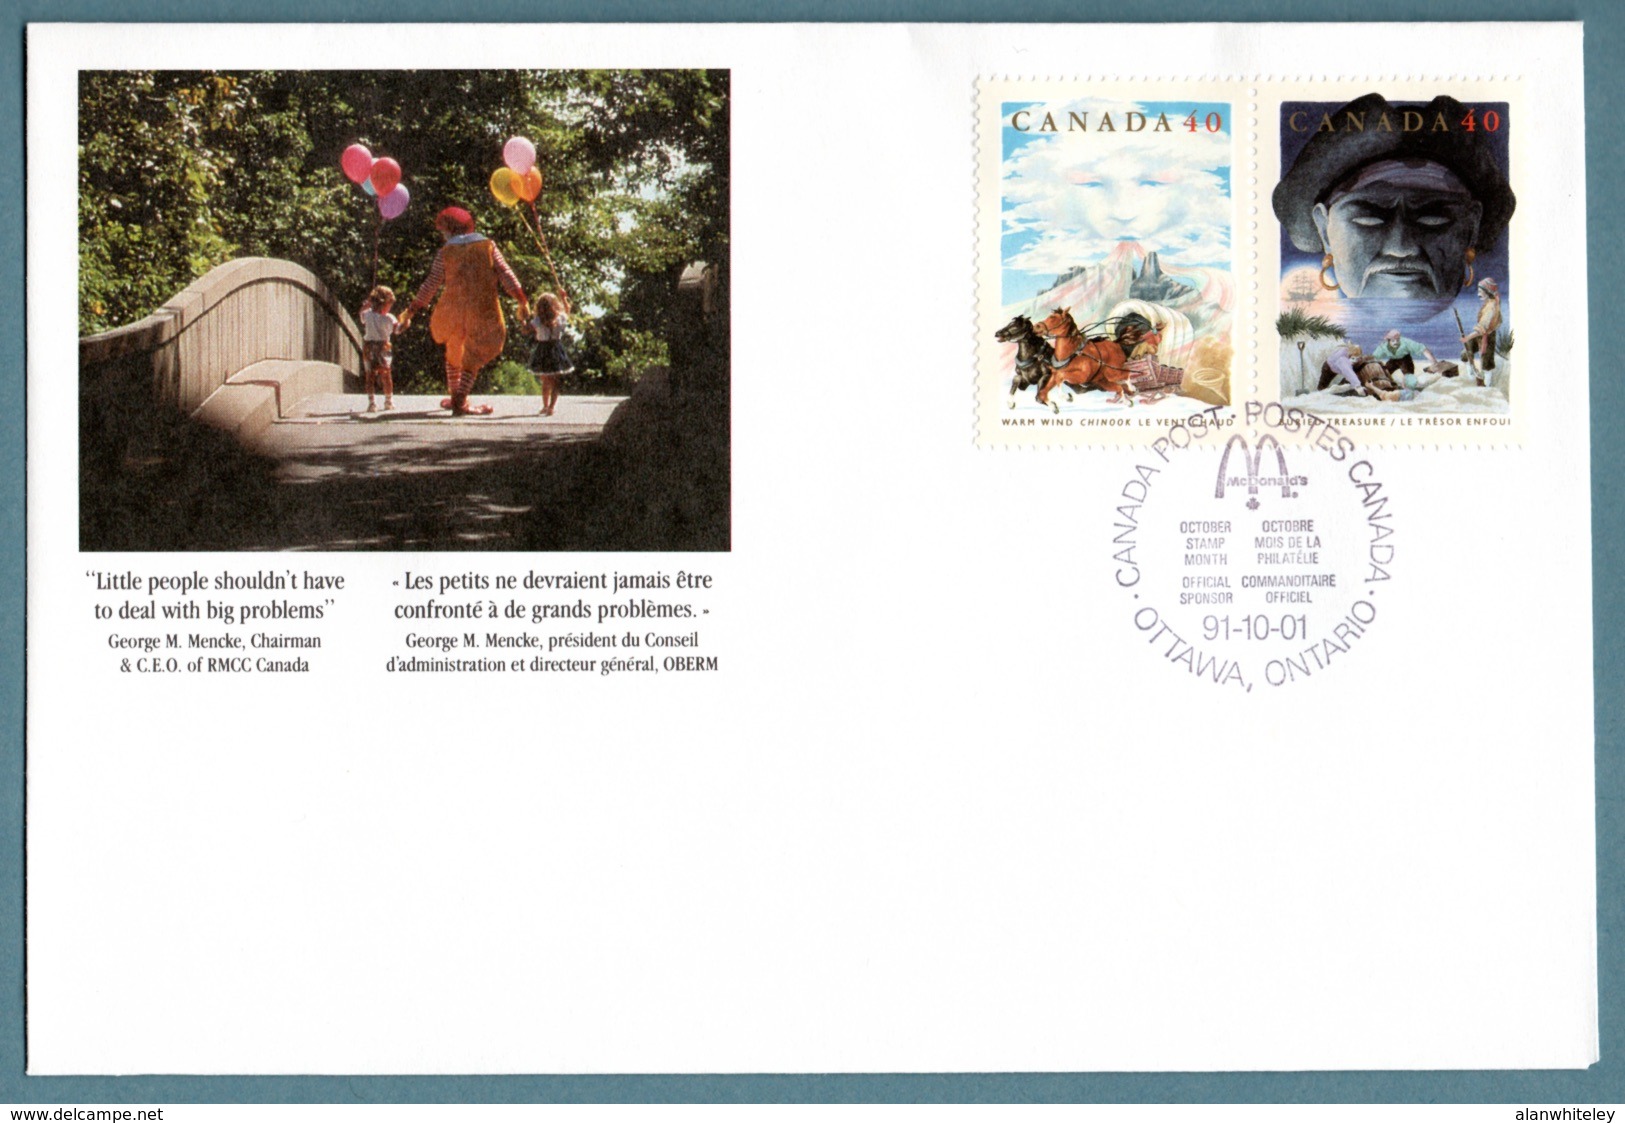 CANADA 1991 Canadian Folktales / McDonalds: Commemorative Cover CANCELLED - Commemorativi